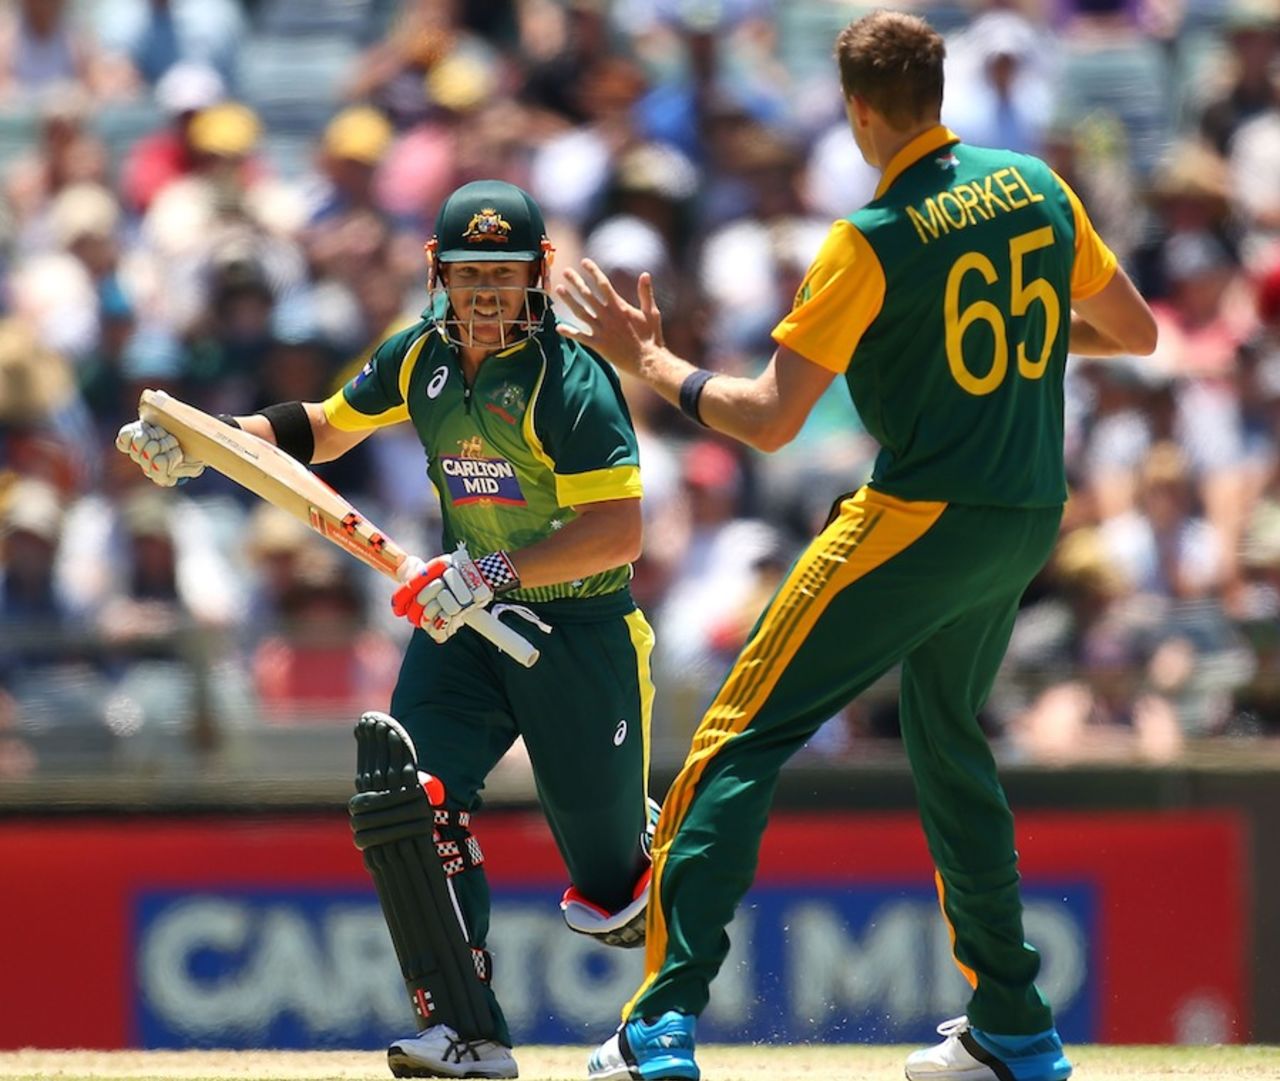 David Warner and Morne Morkel avoid a collision, Australia v South Africa, 1st ODI, Perth, November 14, 2014